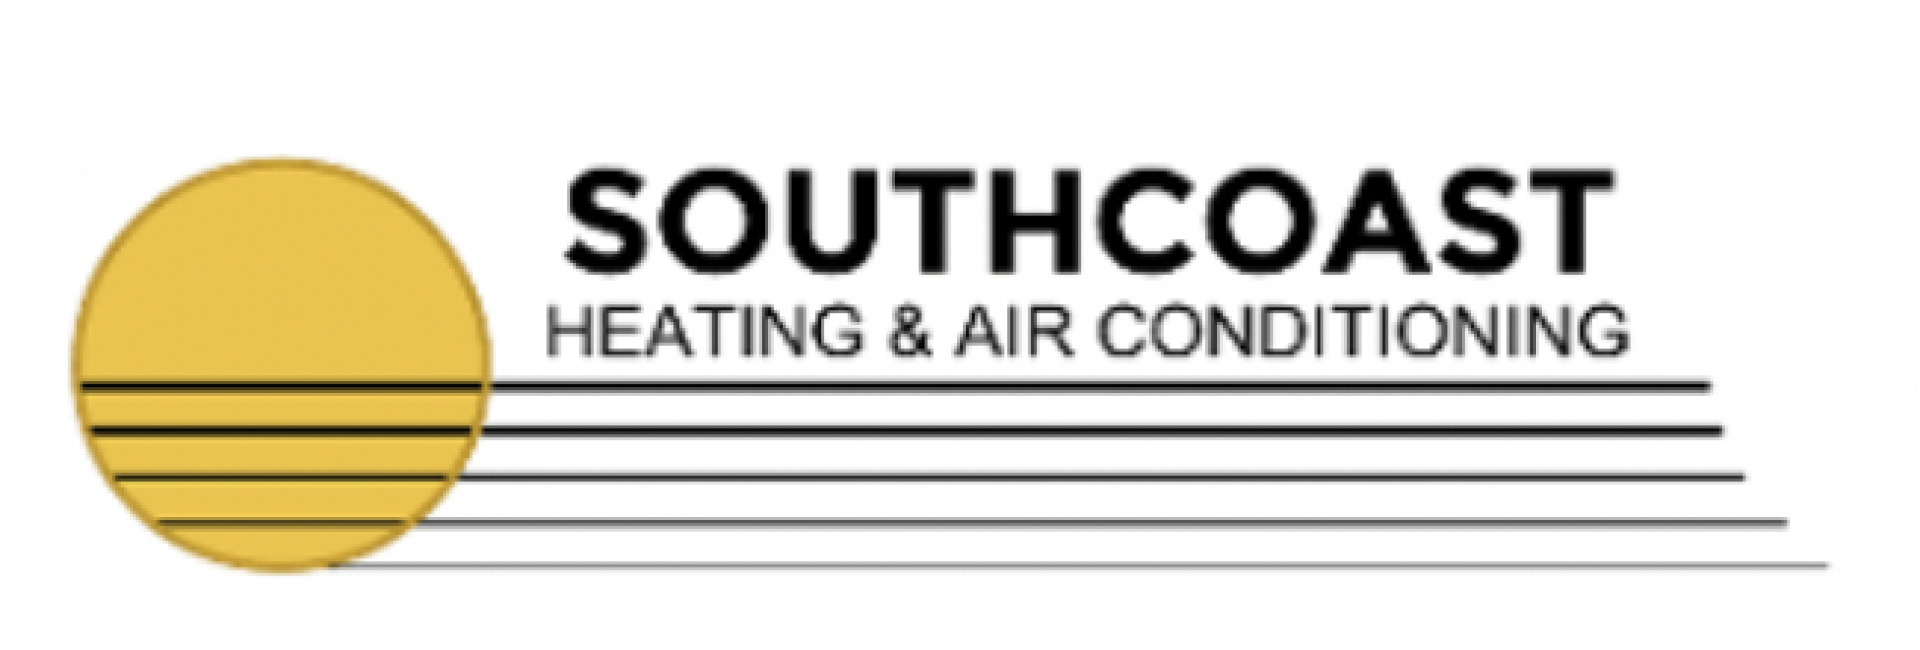 Southcoast Heating & Air Conditioning LP company logo